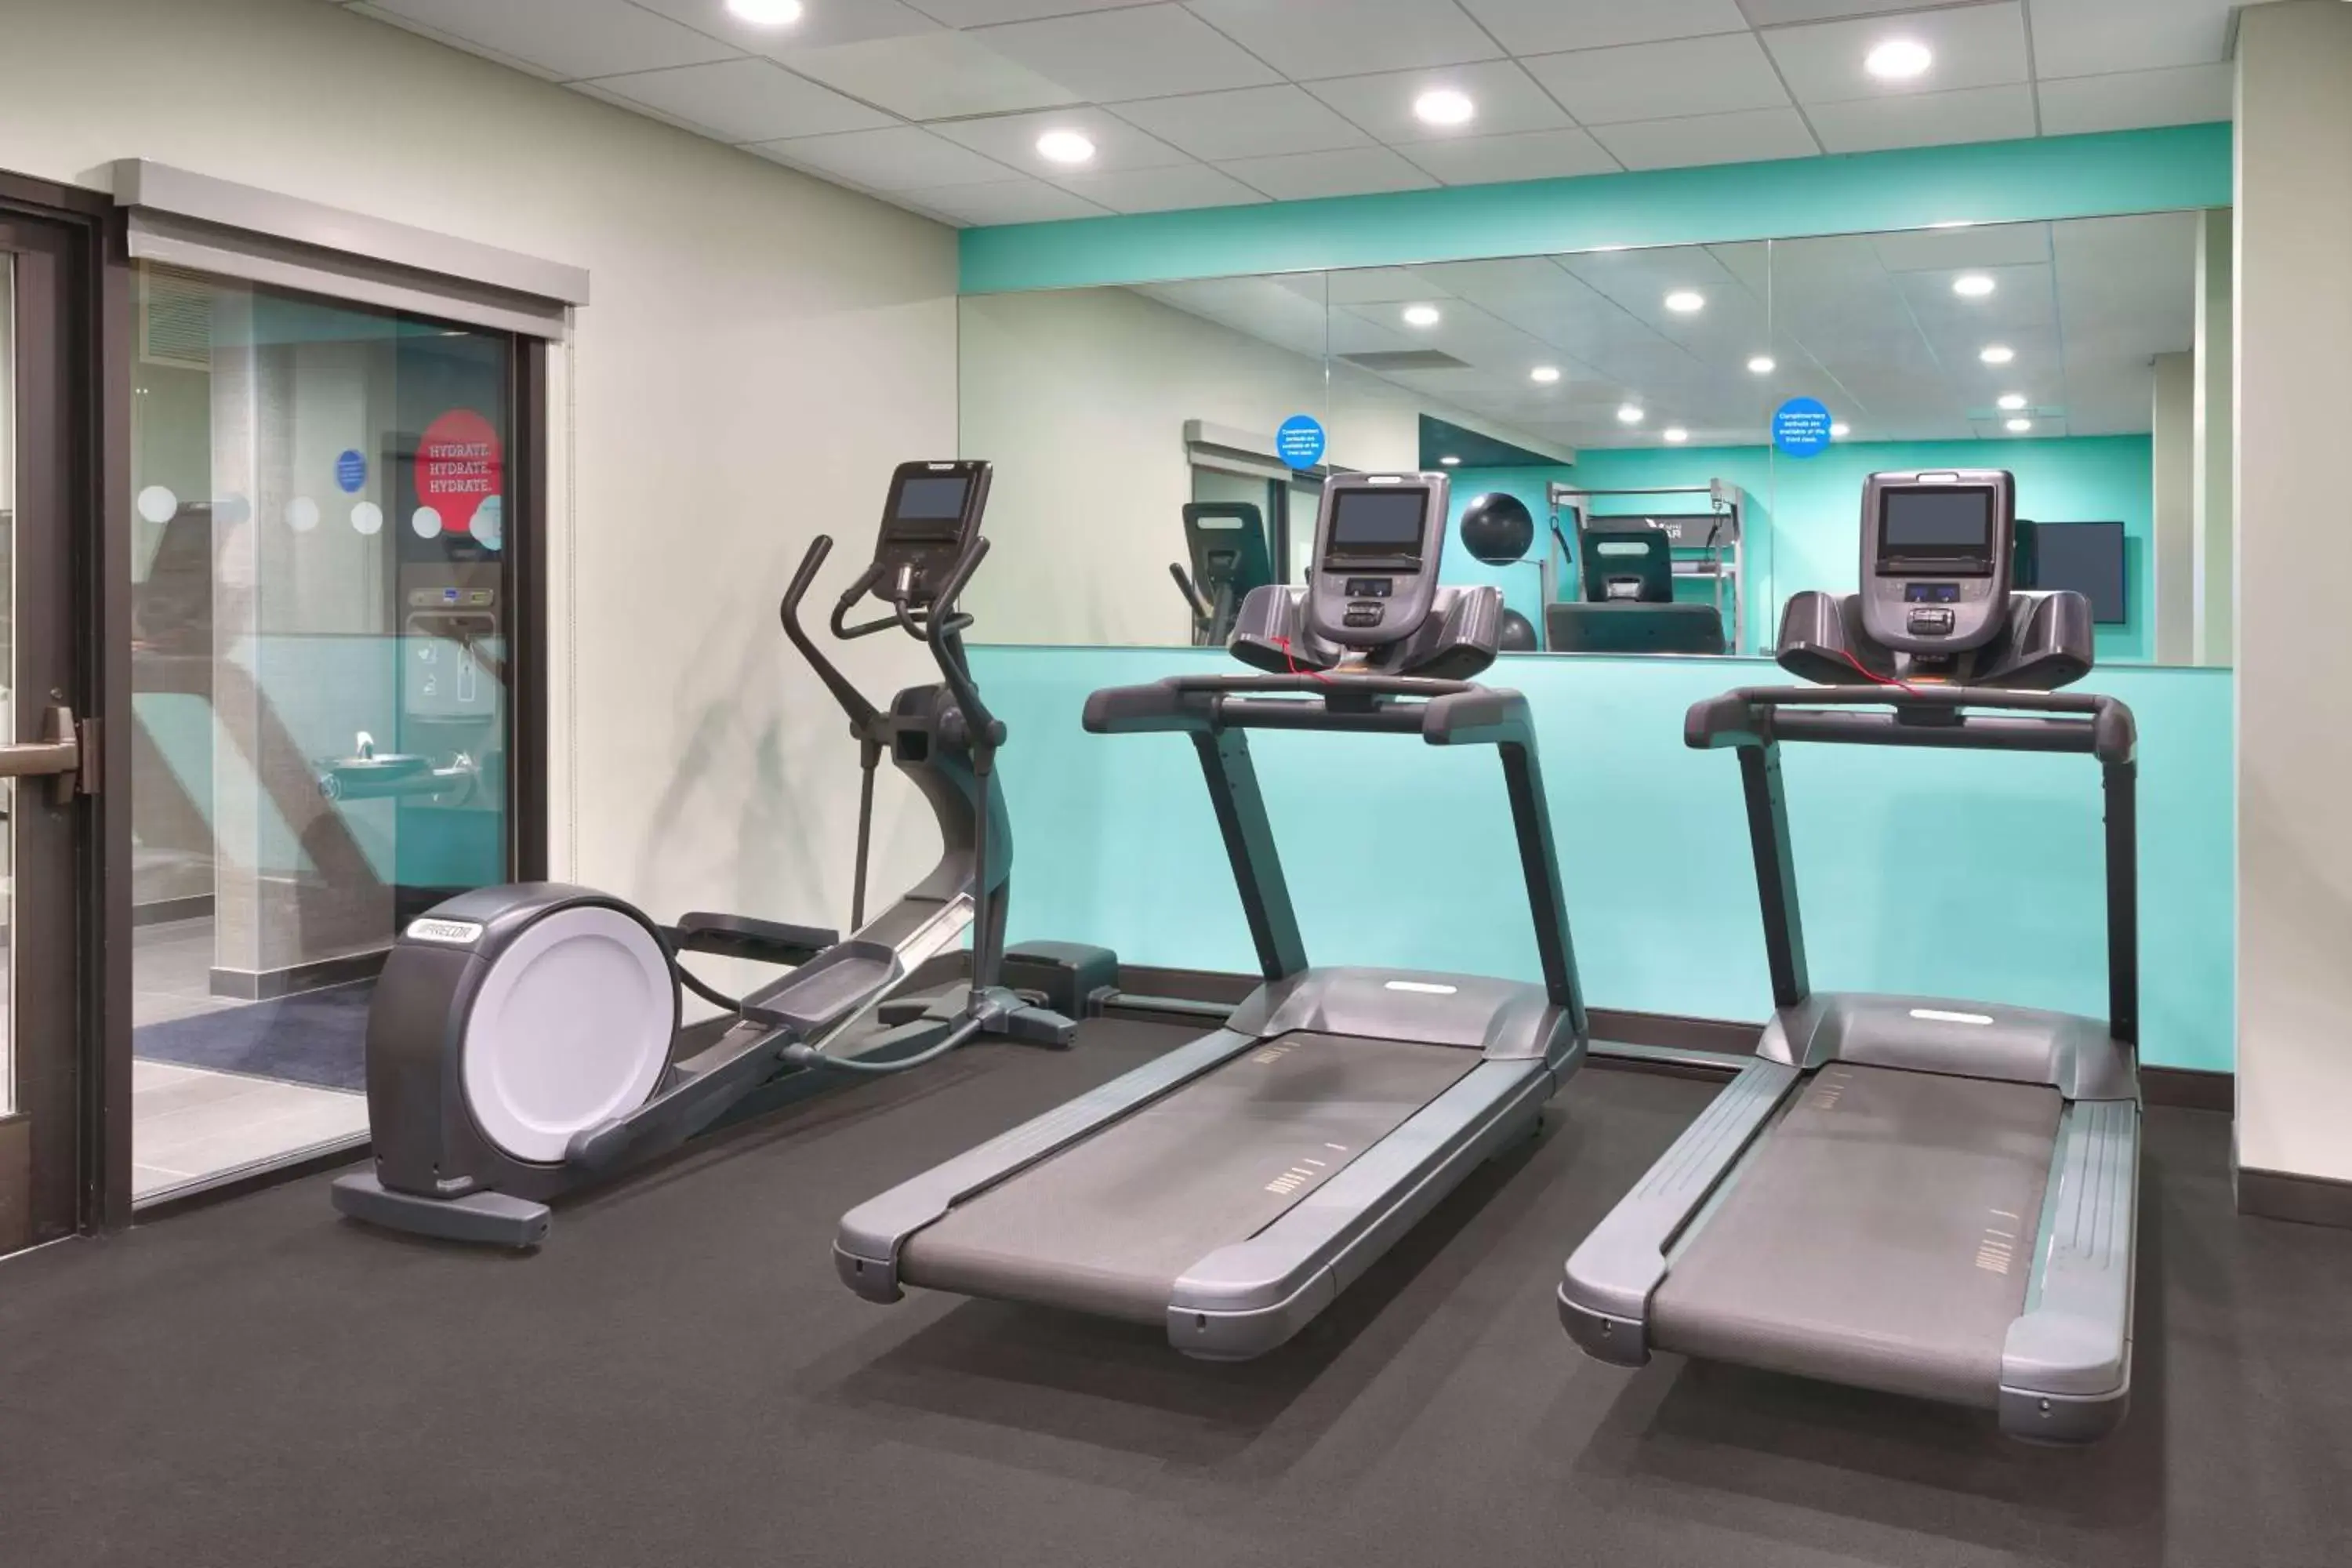 Fitness centre/facilities, Fitness Center/Facilities in Tru By Hilton Lehi, Ut